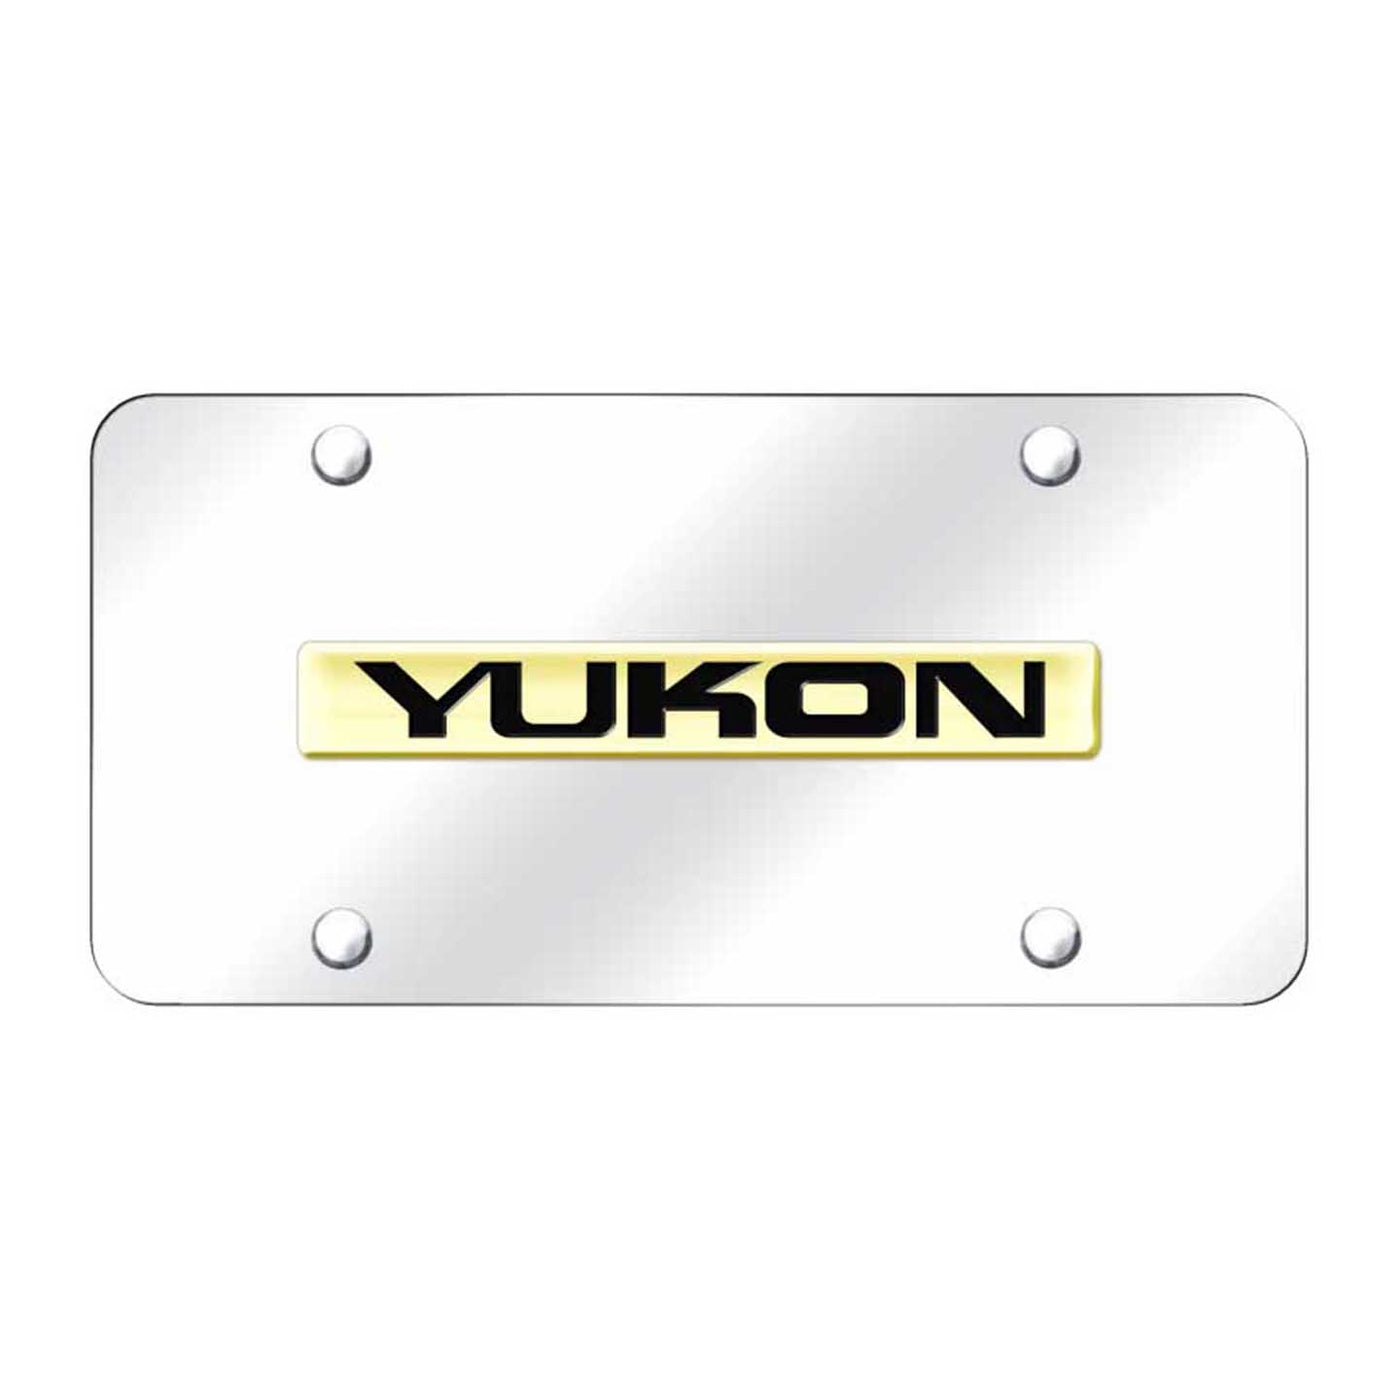 Yukon XL Name License Plate - Gold on Mirrored